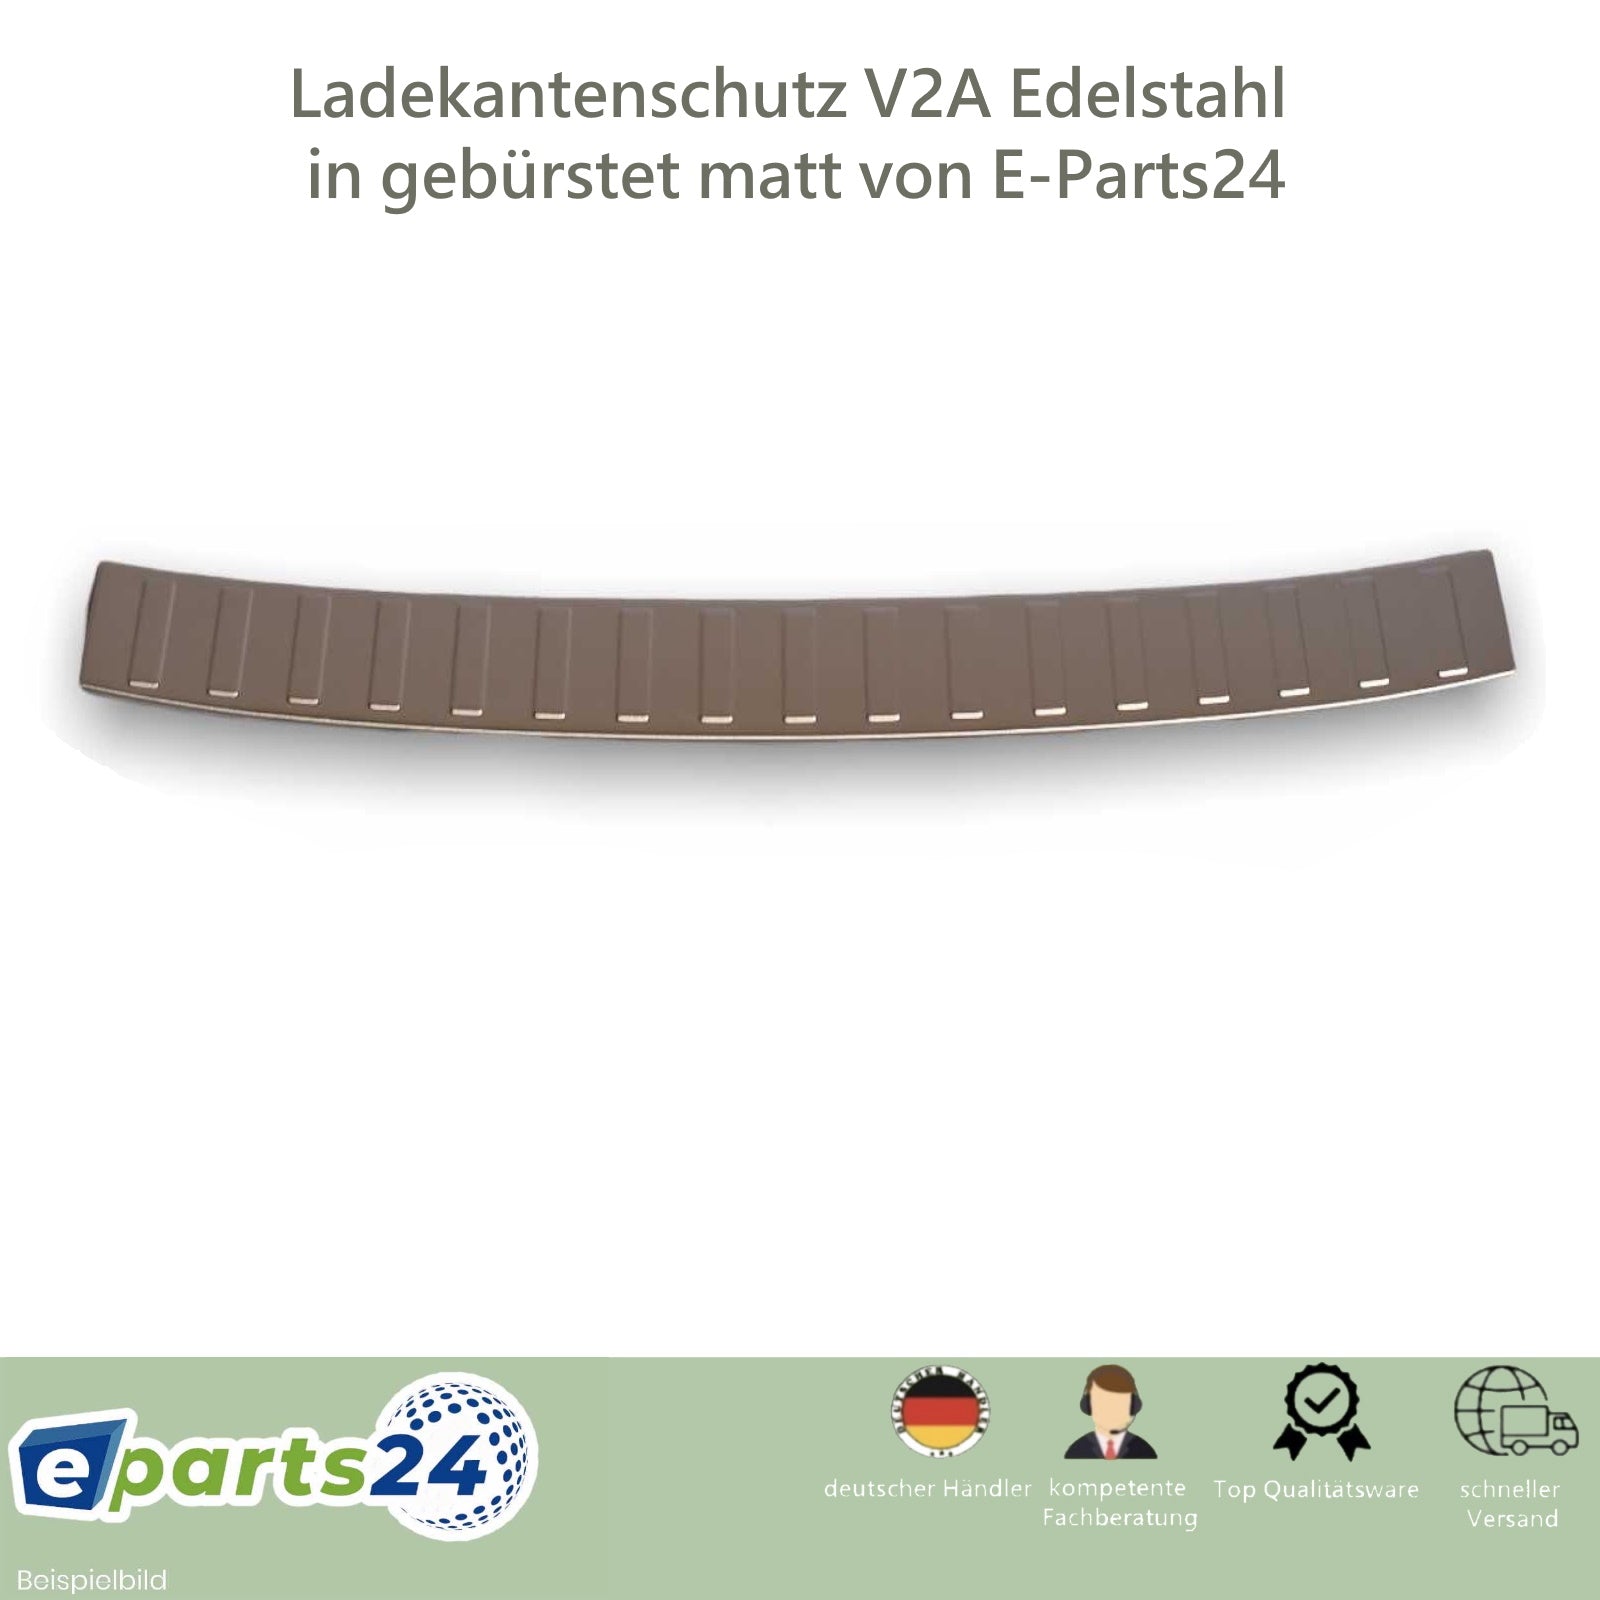 – E-Parts24 Ladekantenschutz